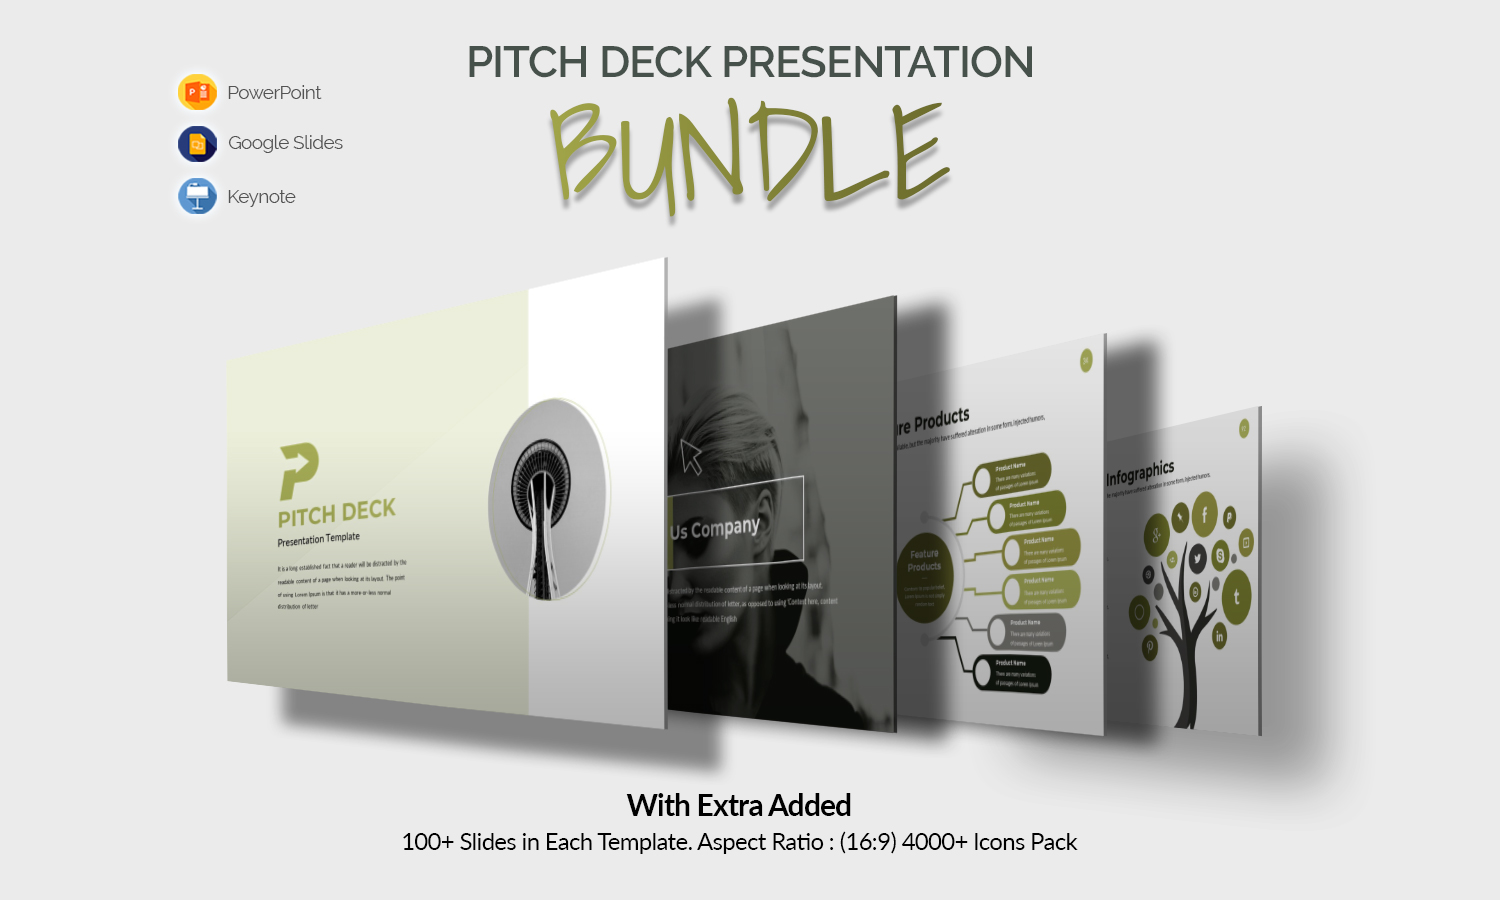 Pitch Deck Presentation Bundle Pack